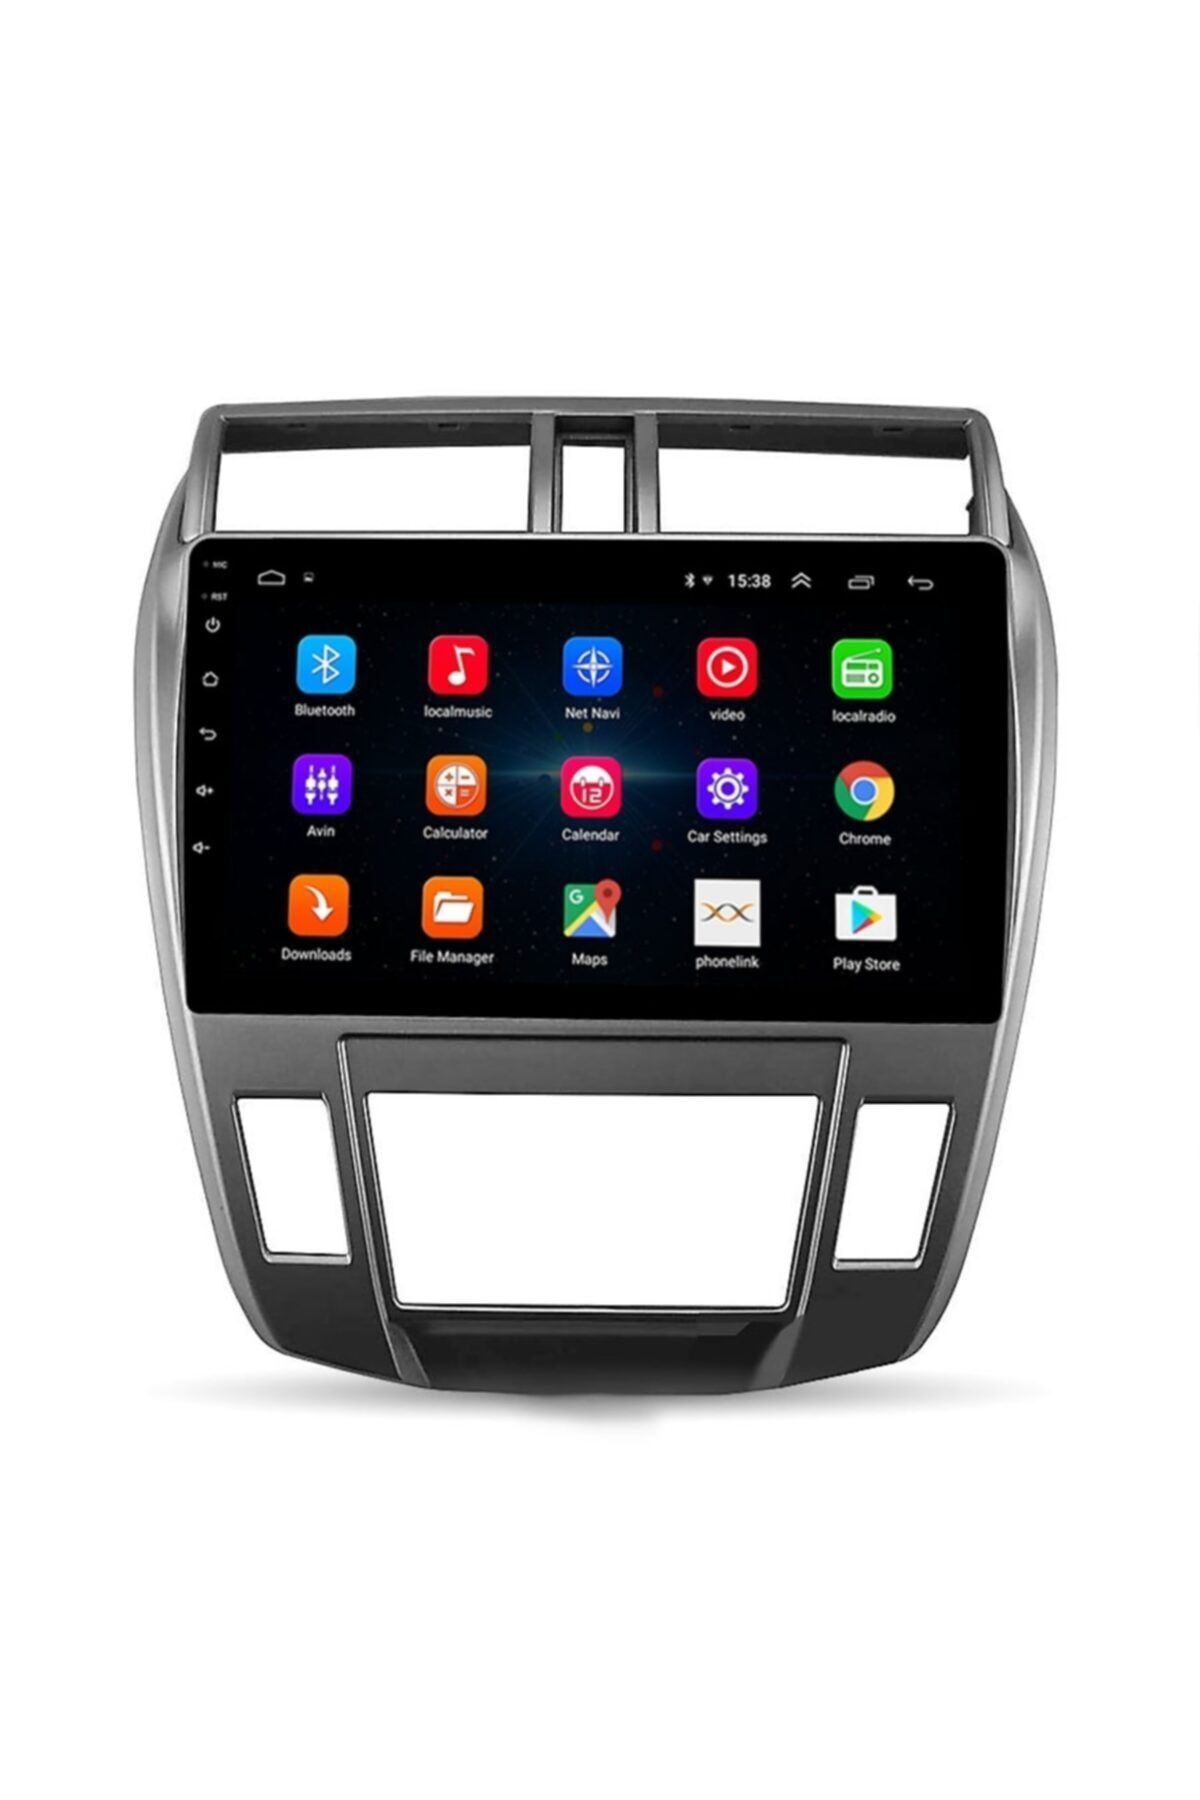 Mixtech Honda City Digital Klima 10.1 Inç Android Navigasyon Ve Multimedya Sistemi